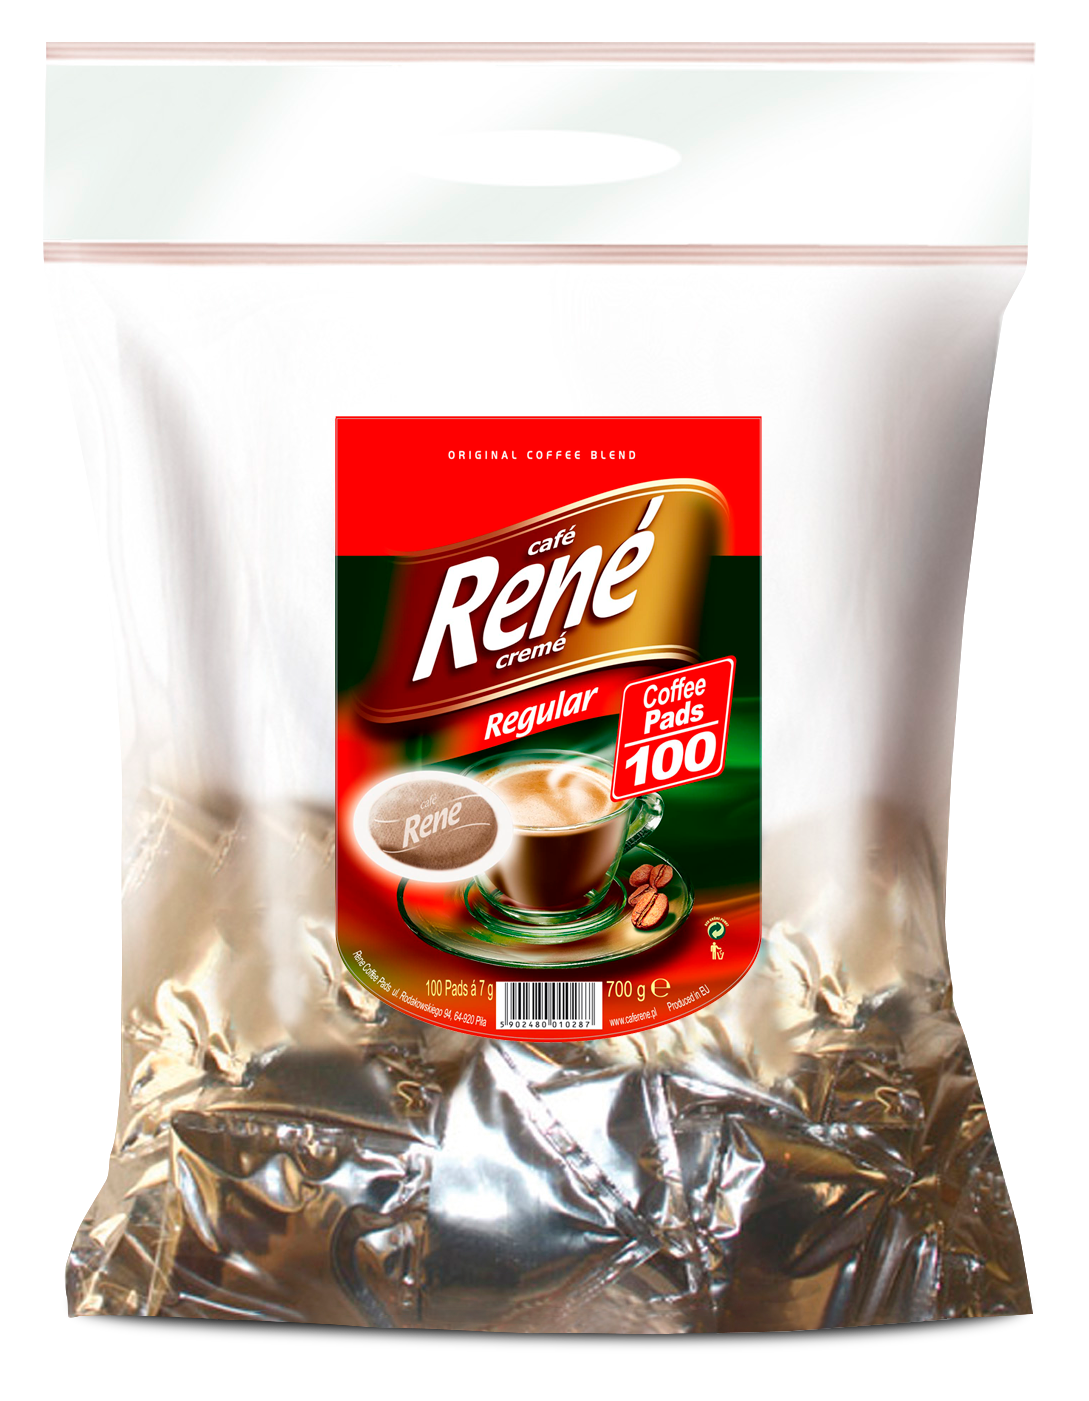 Coffee Pads Regular 100 - Rene Cafe